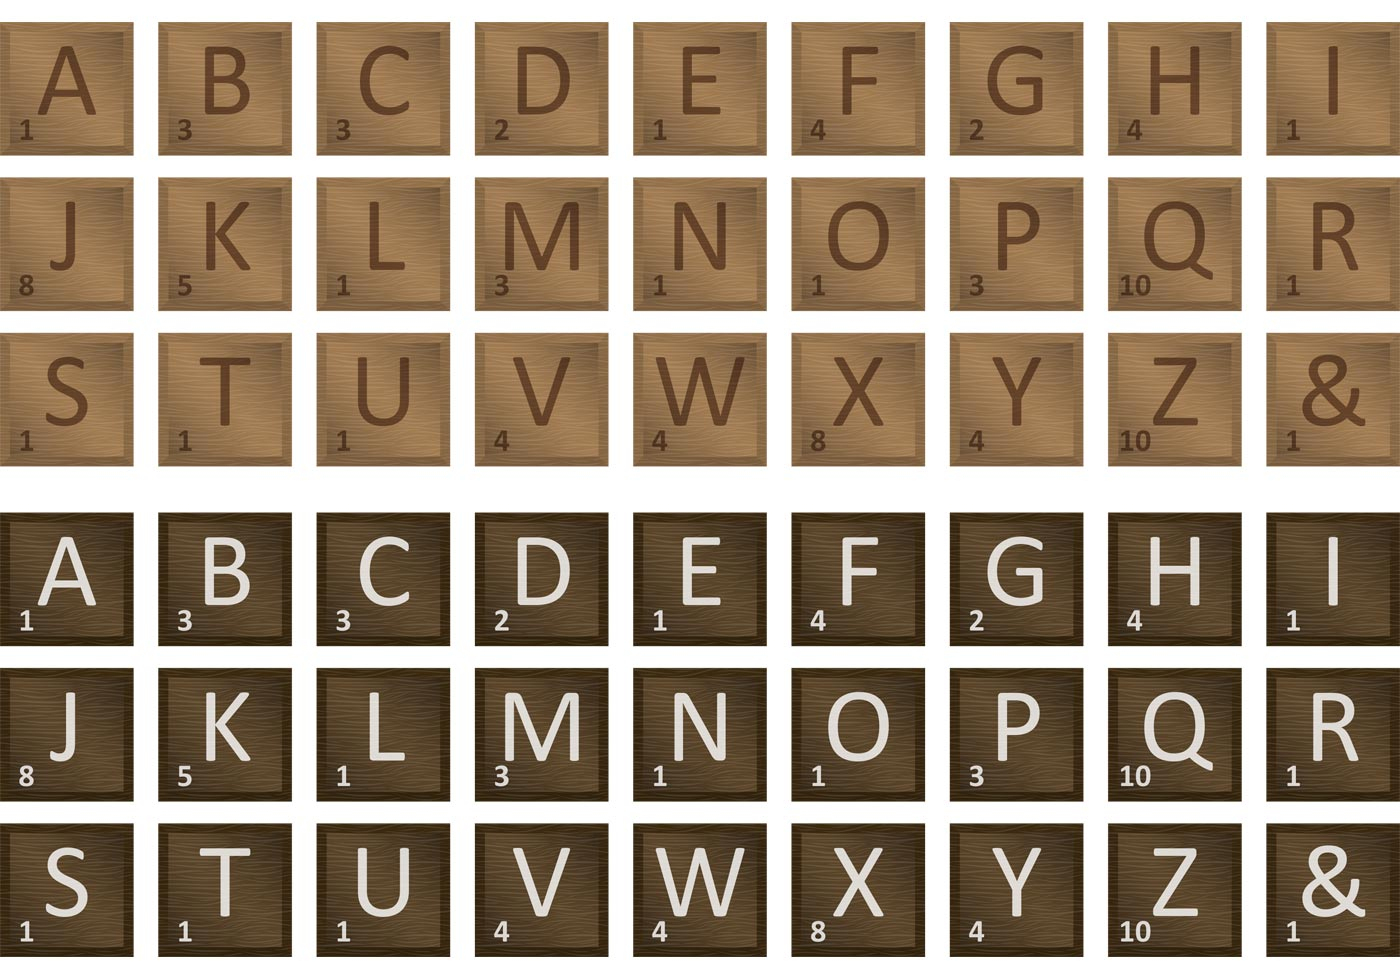 Scrabble Letter Tiles Set - Download Free Vector Art, Stock Graphics - Free Printable Scrabble Tiles